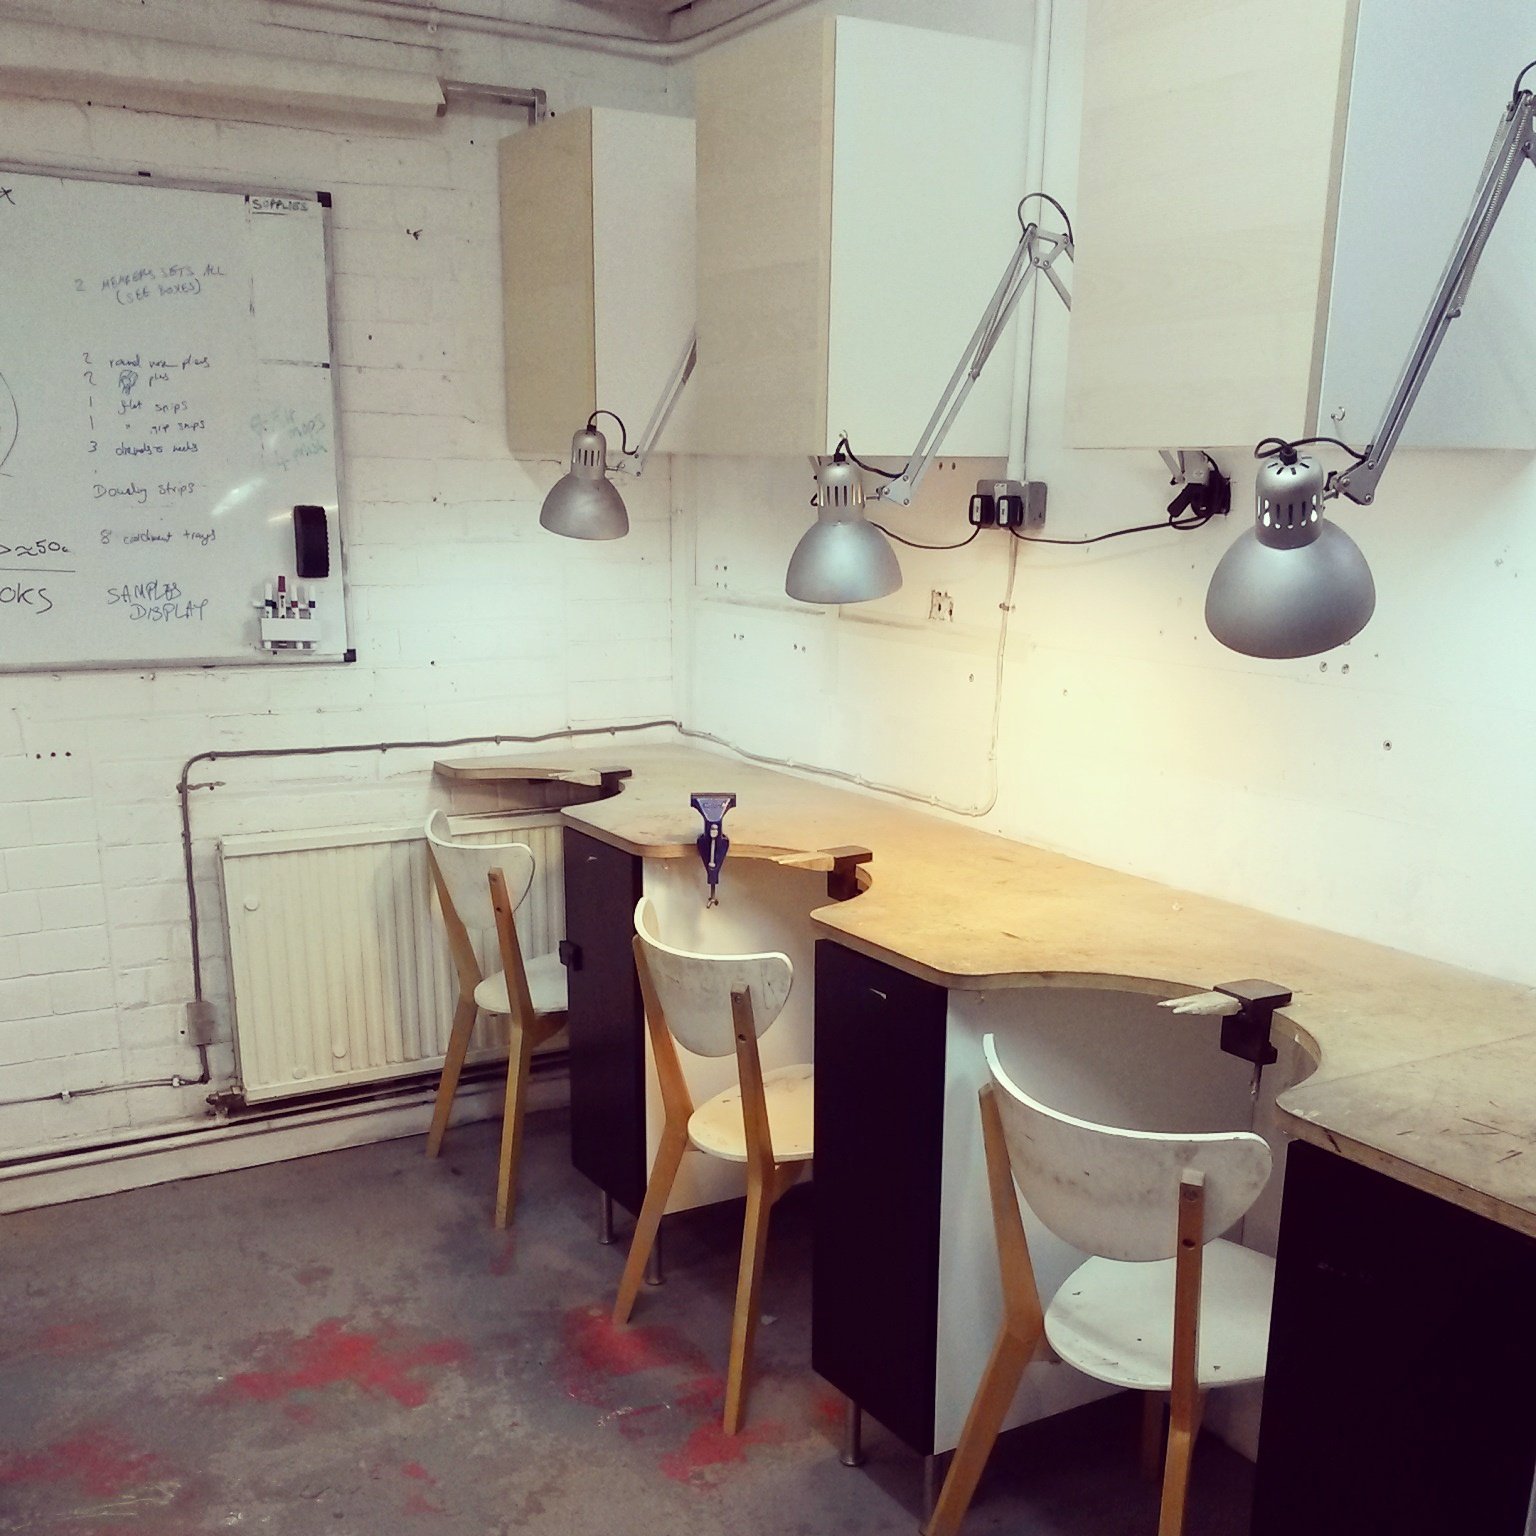 Main Workshop - bench space